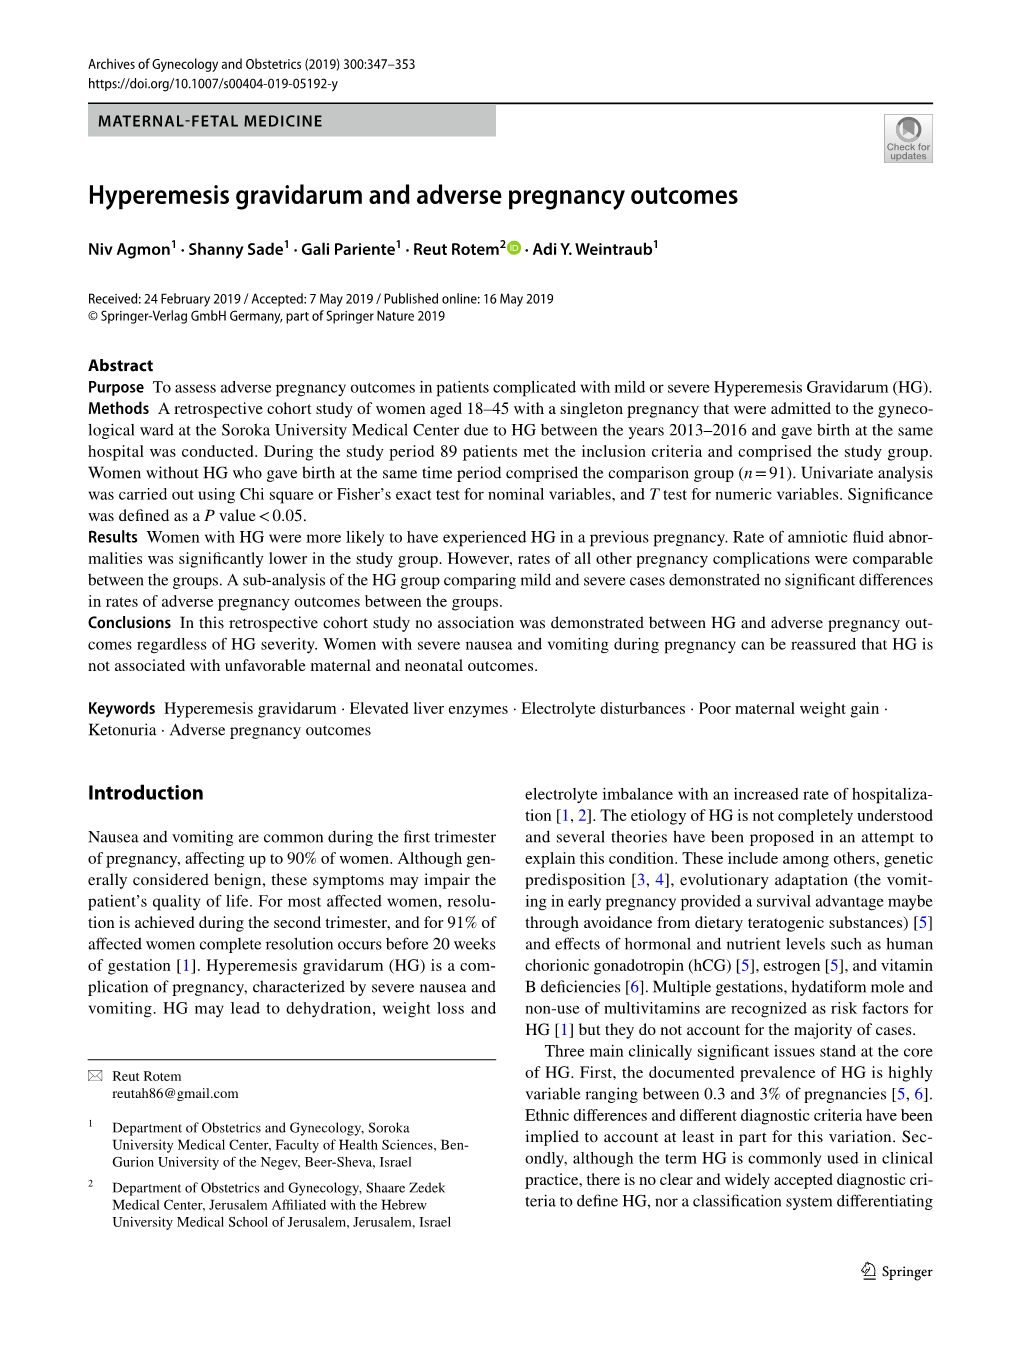 Hyperemesis Gravidarum and Adverse Pregnancy Outcomes